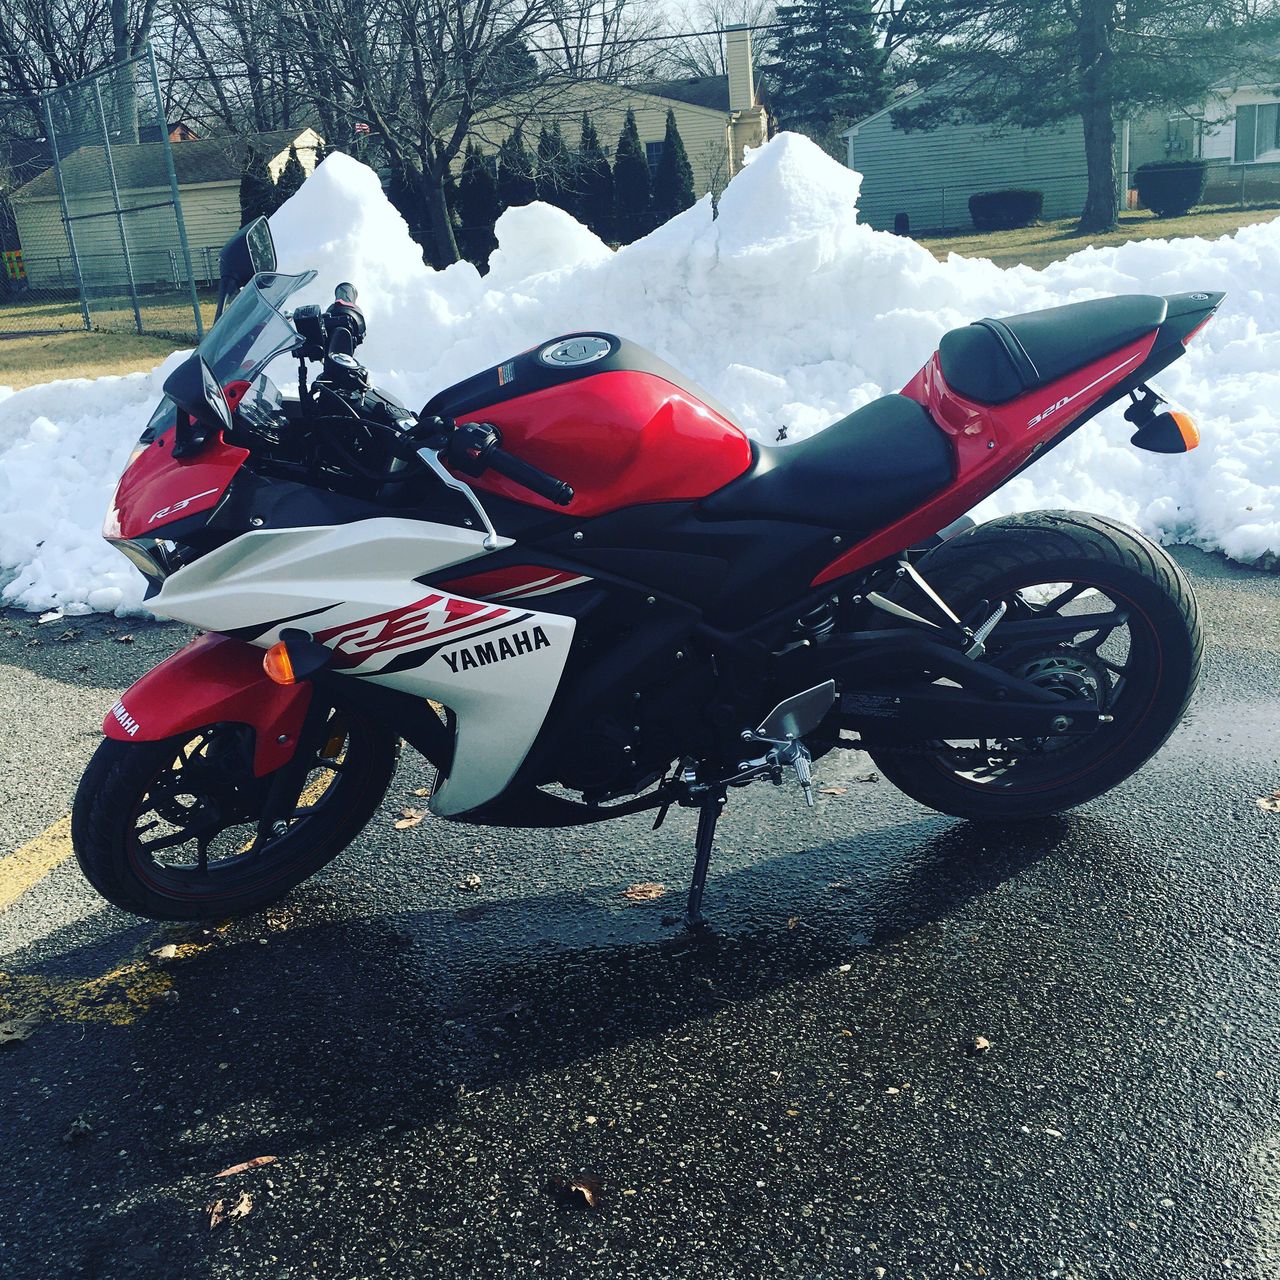 Snowy day ride